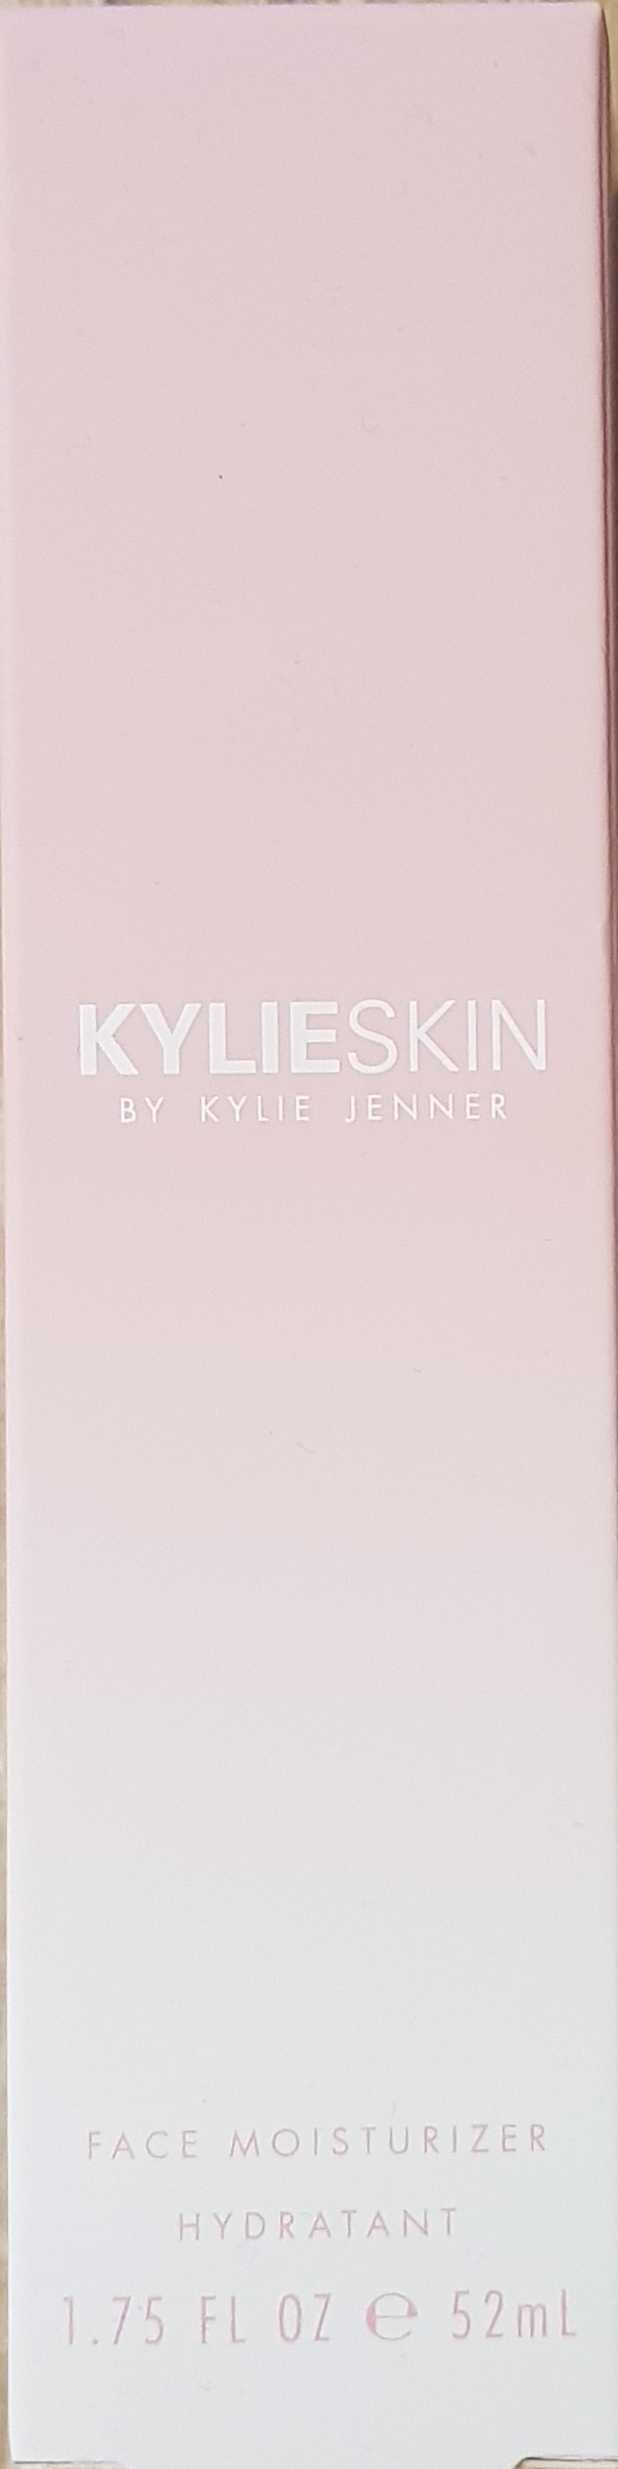 Vand Kylie Jenner face moisturizer hydratant 52 ml